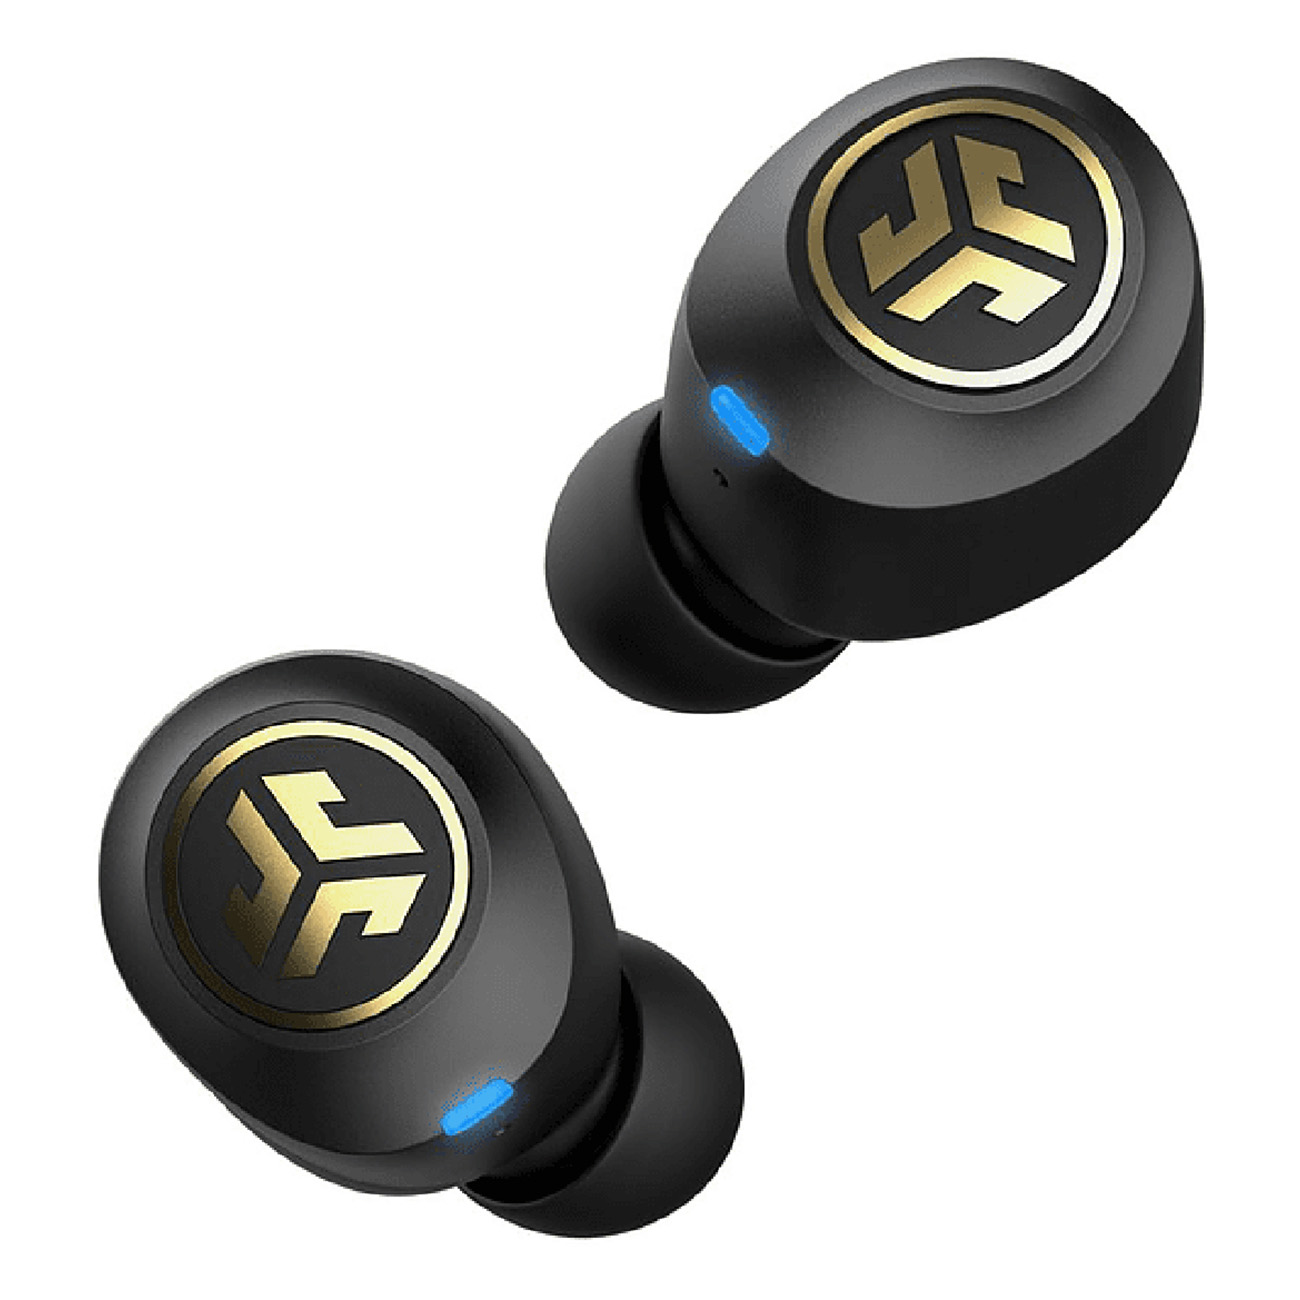 JLAB Bluetooth Air Kopfhörer JBuds In-ear schwarz Icon,